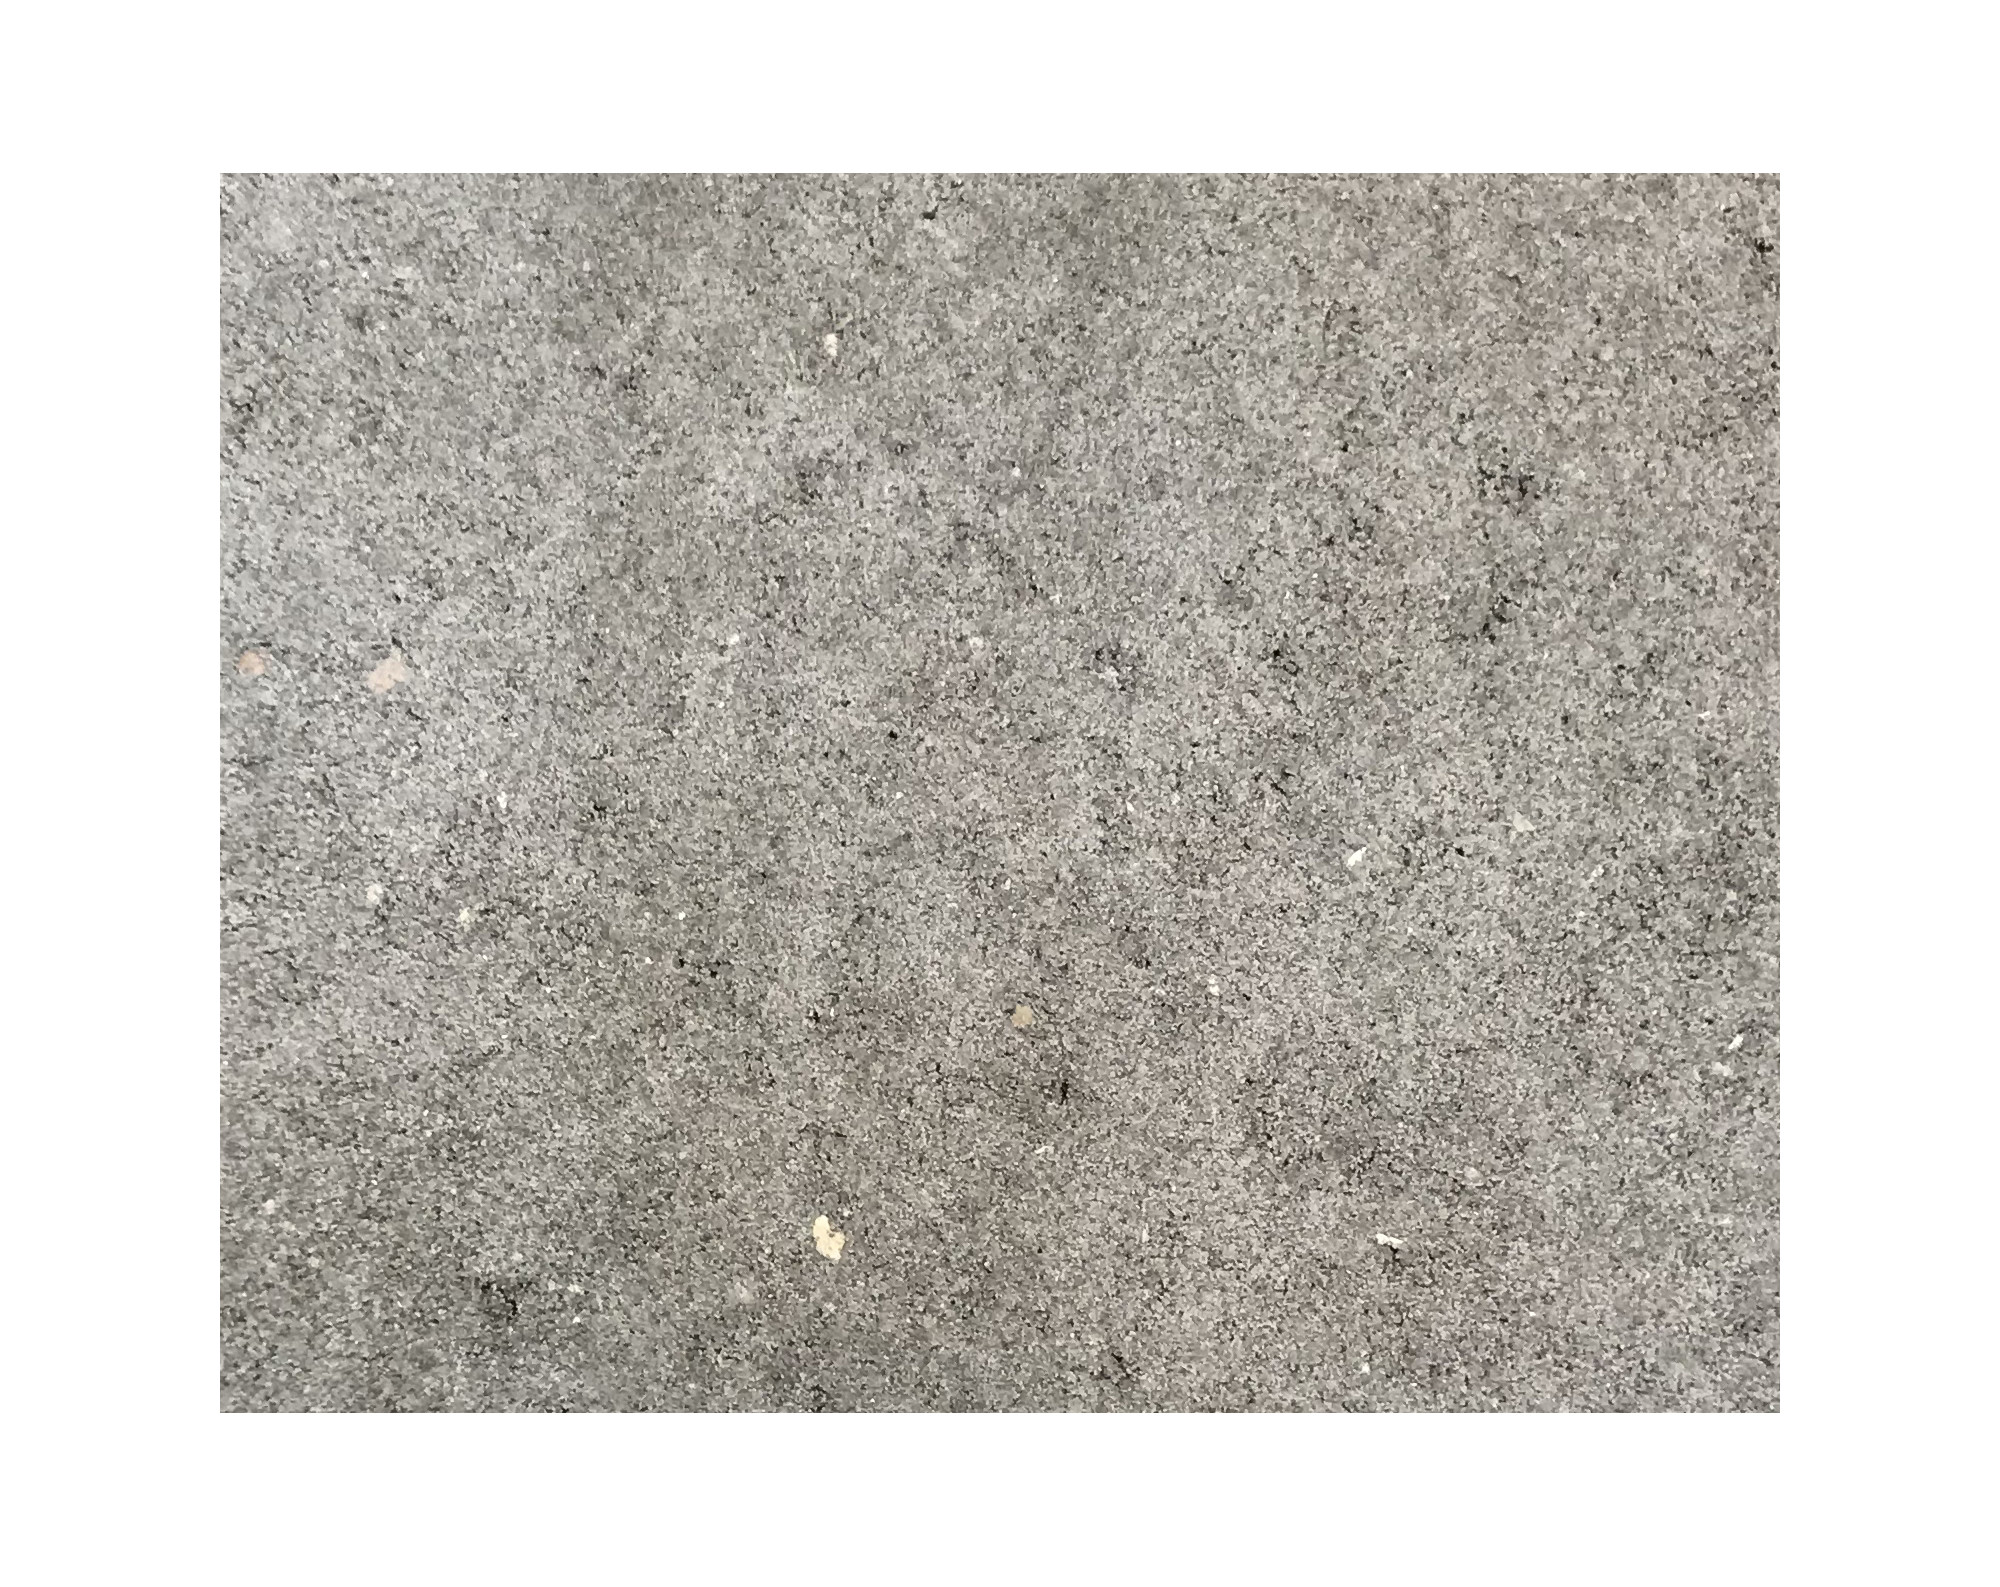 Harmo roc athenset, rustica-serie, rond d:4,60m, grijs, beton